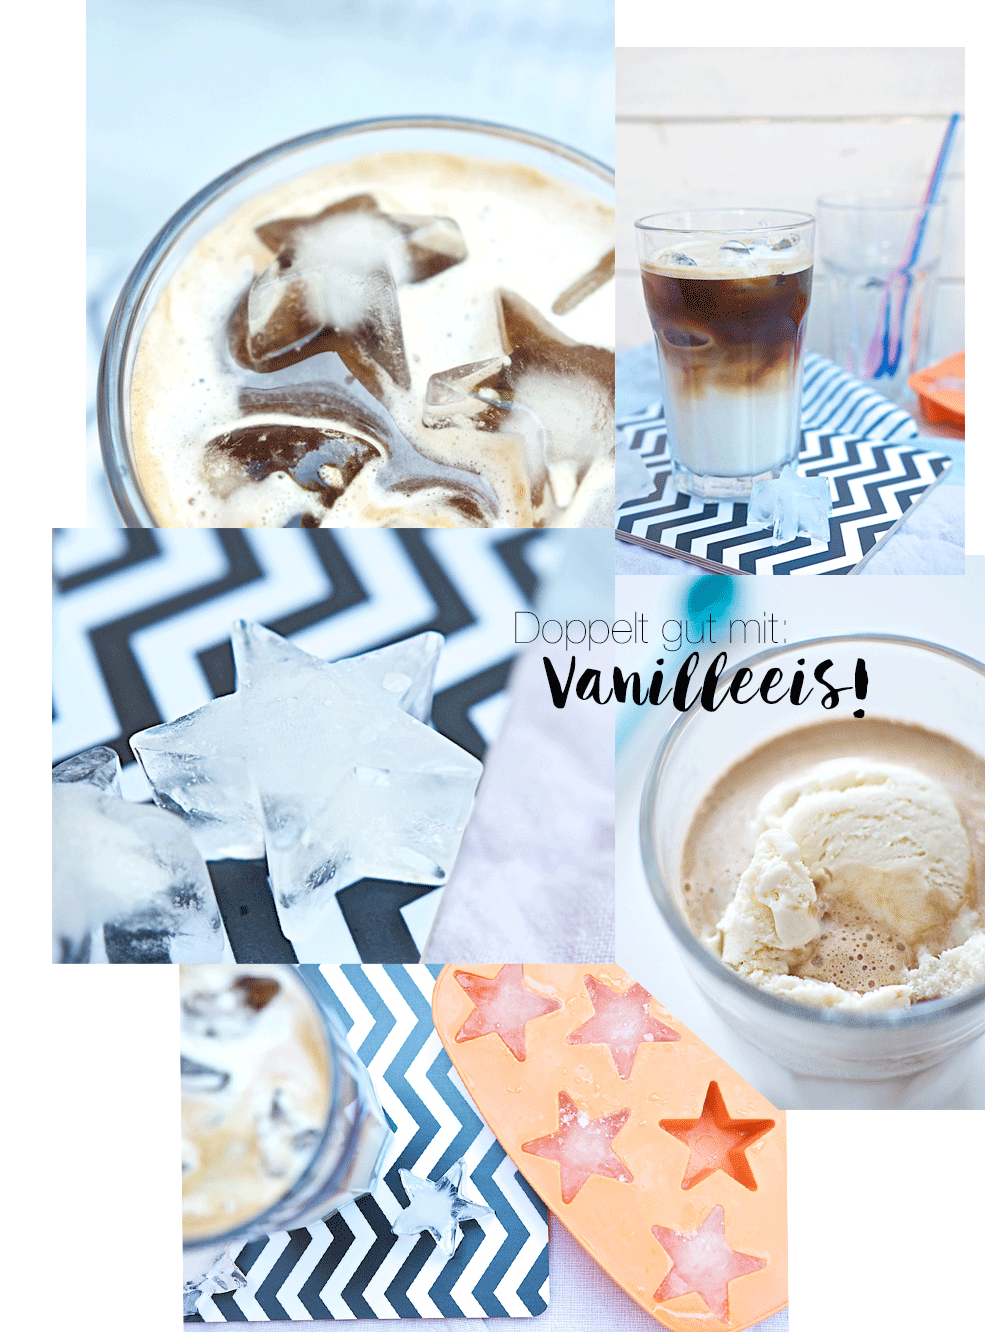 Latte-Macchiato-auf-Eis,-doppelt-gut-mit-Vanilleeis-_-Pinkepank